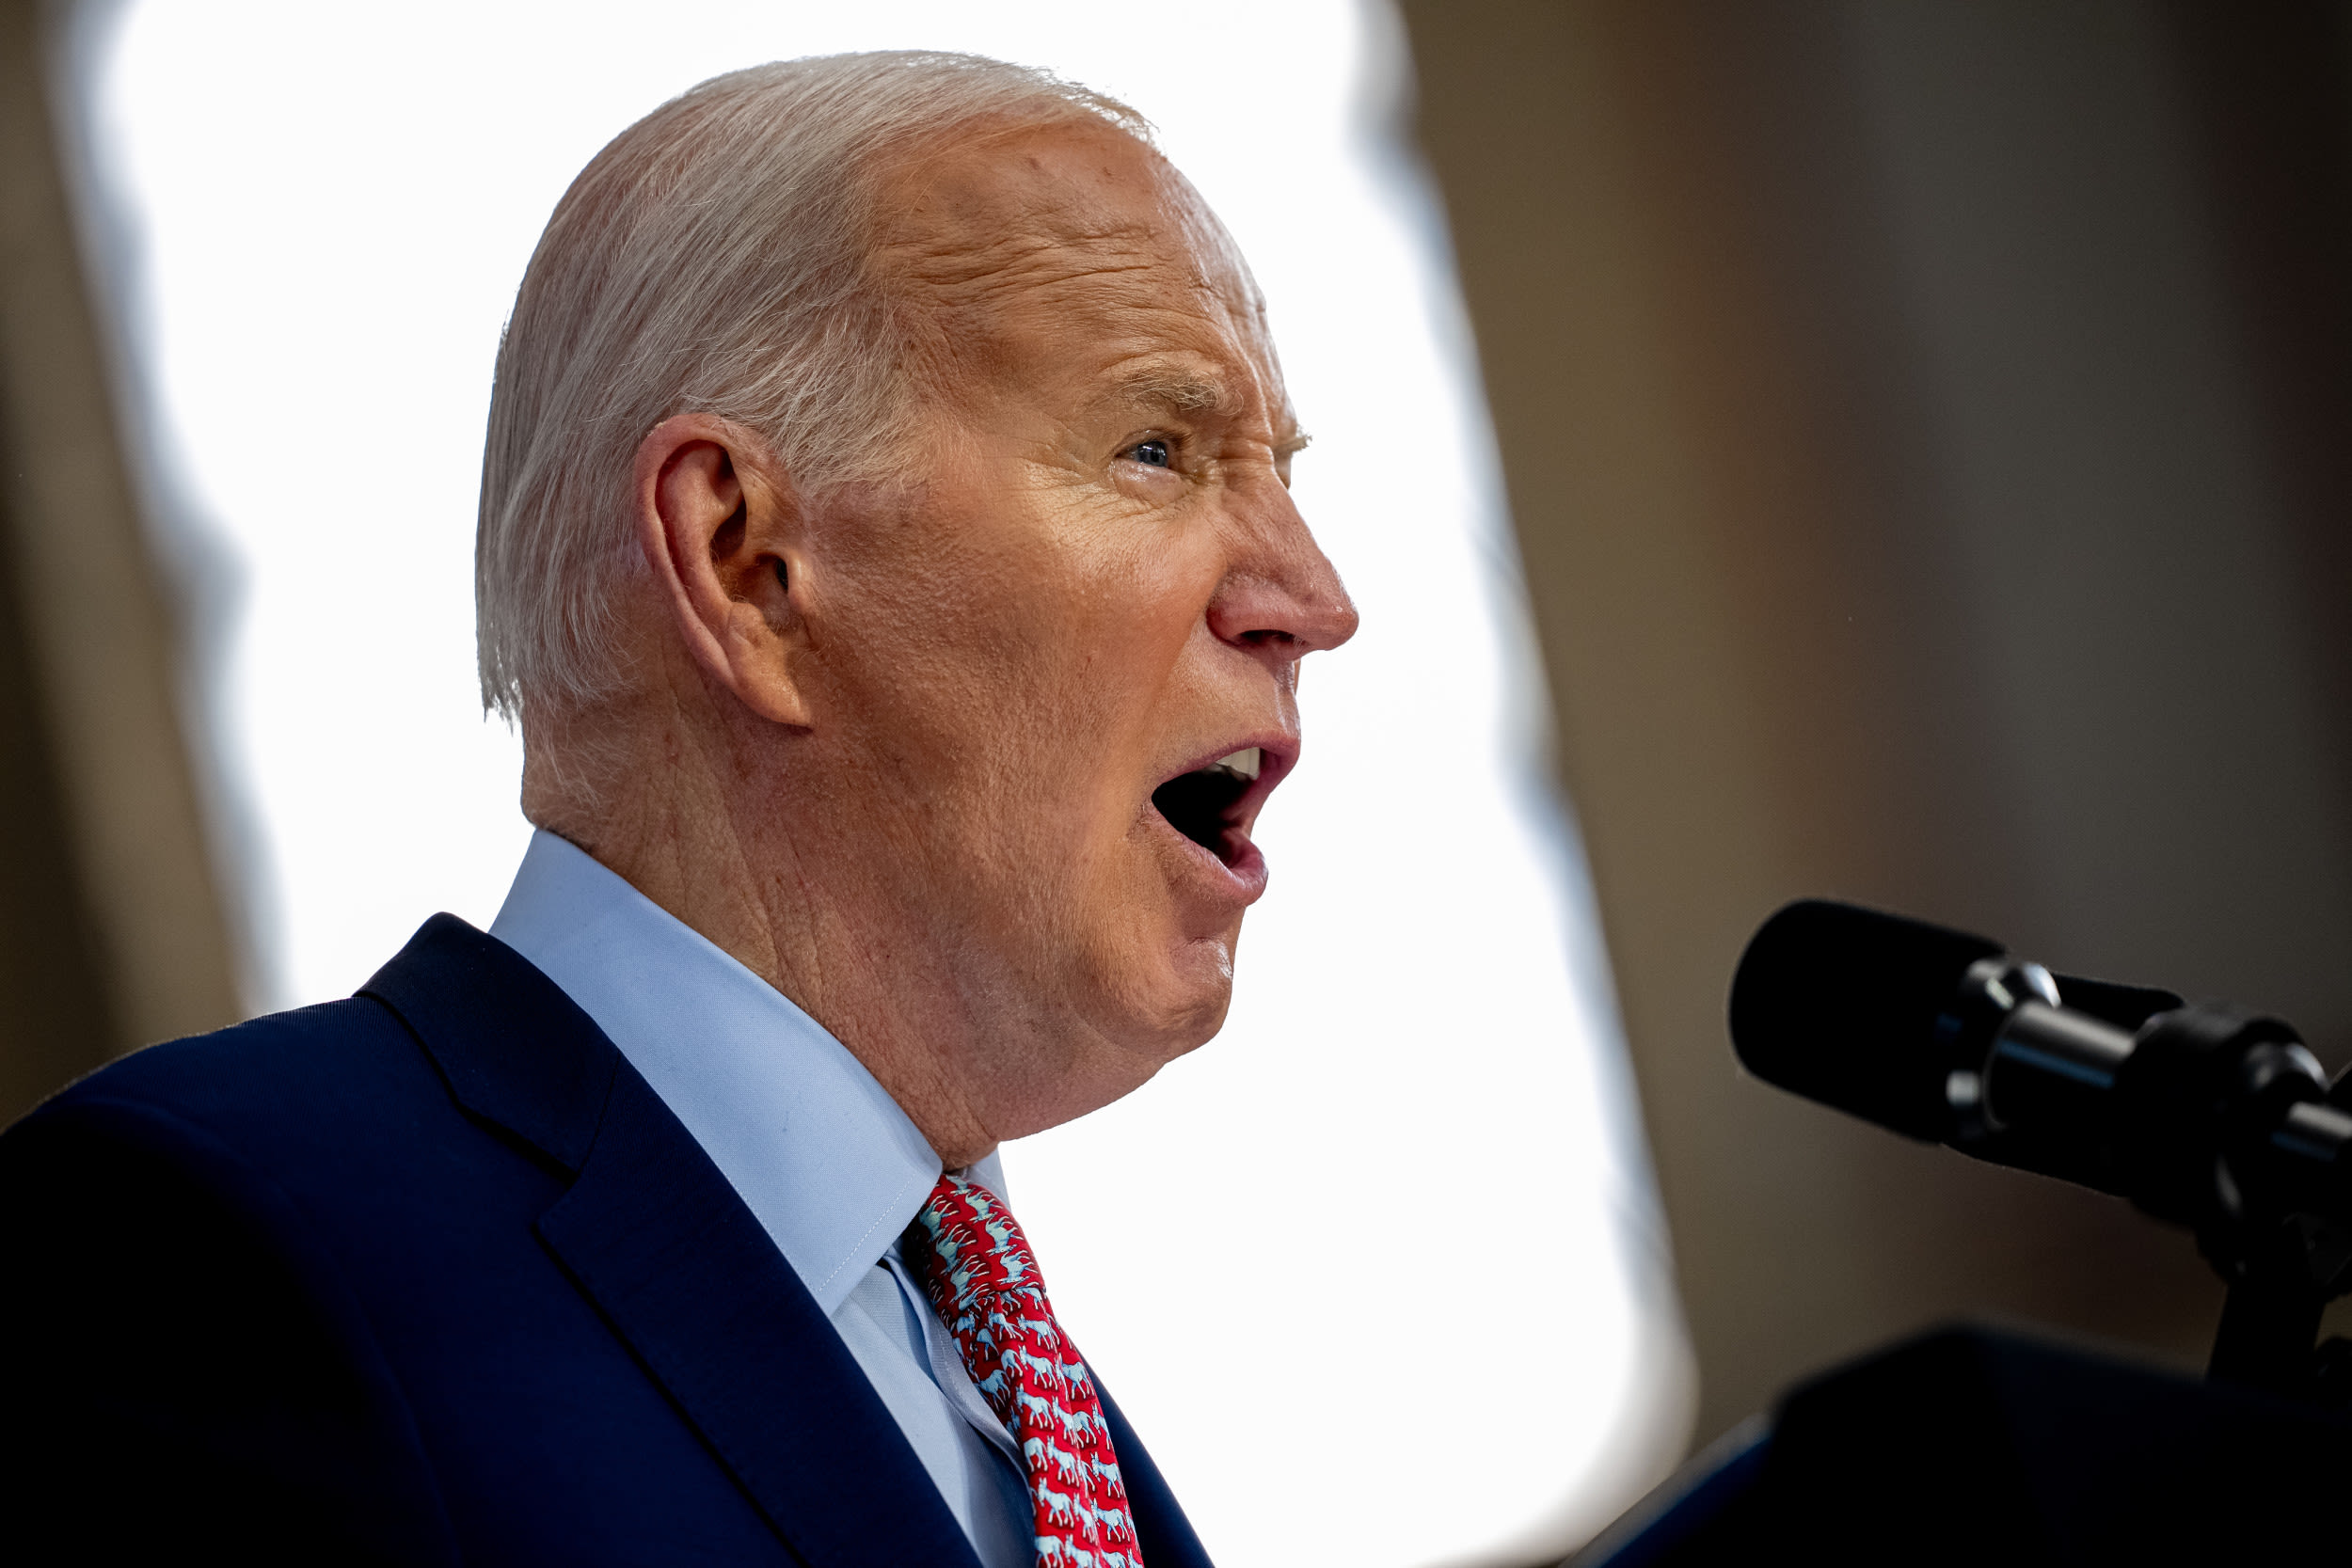 Joe Biden's irritated response to question splits opinion